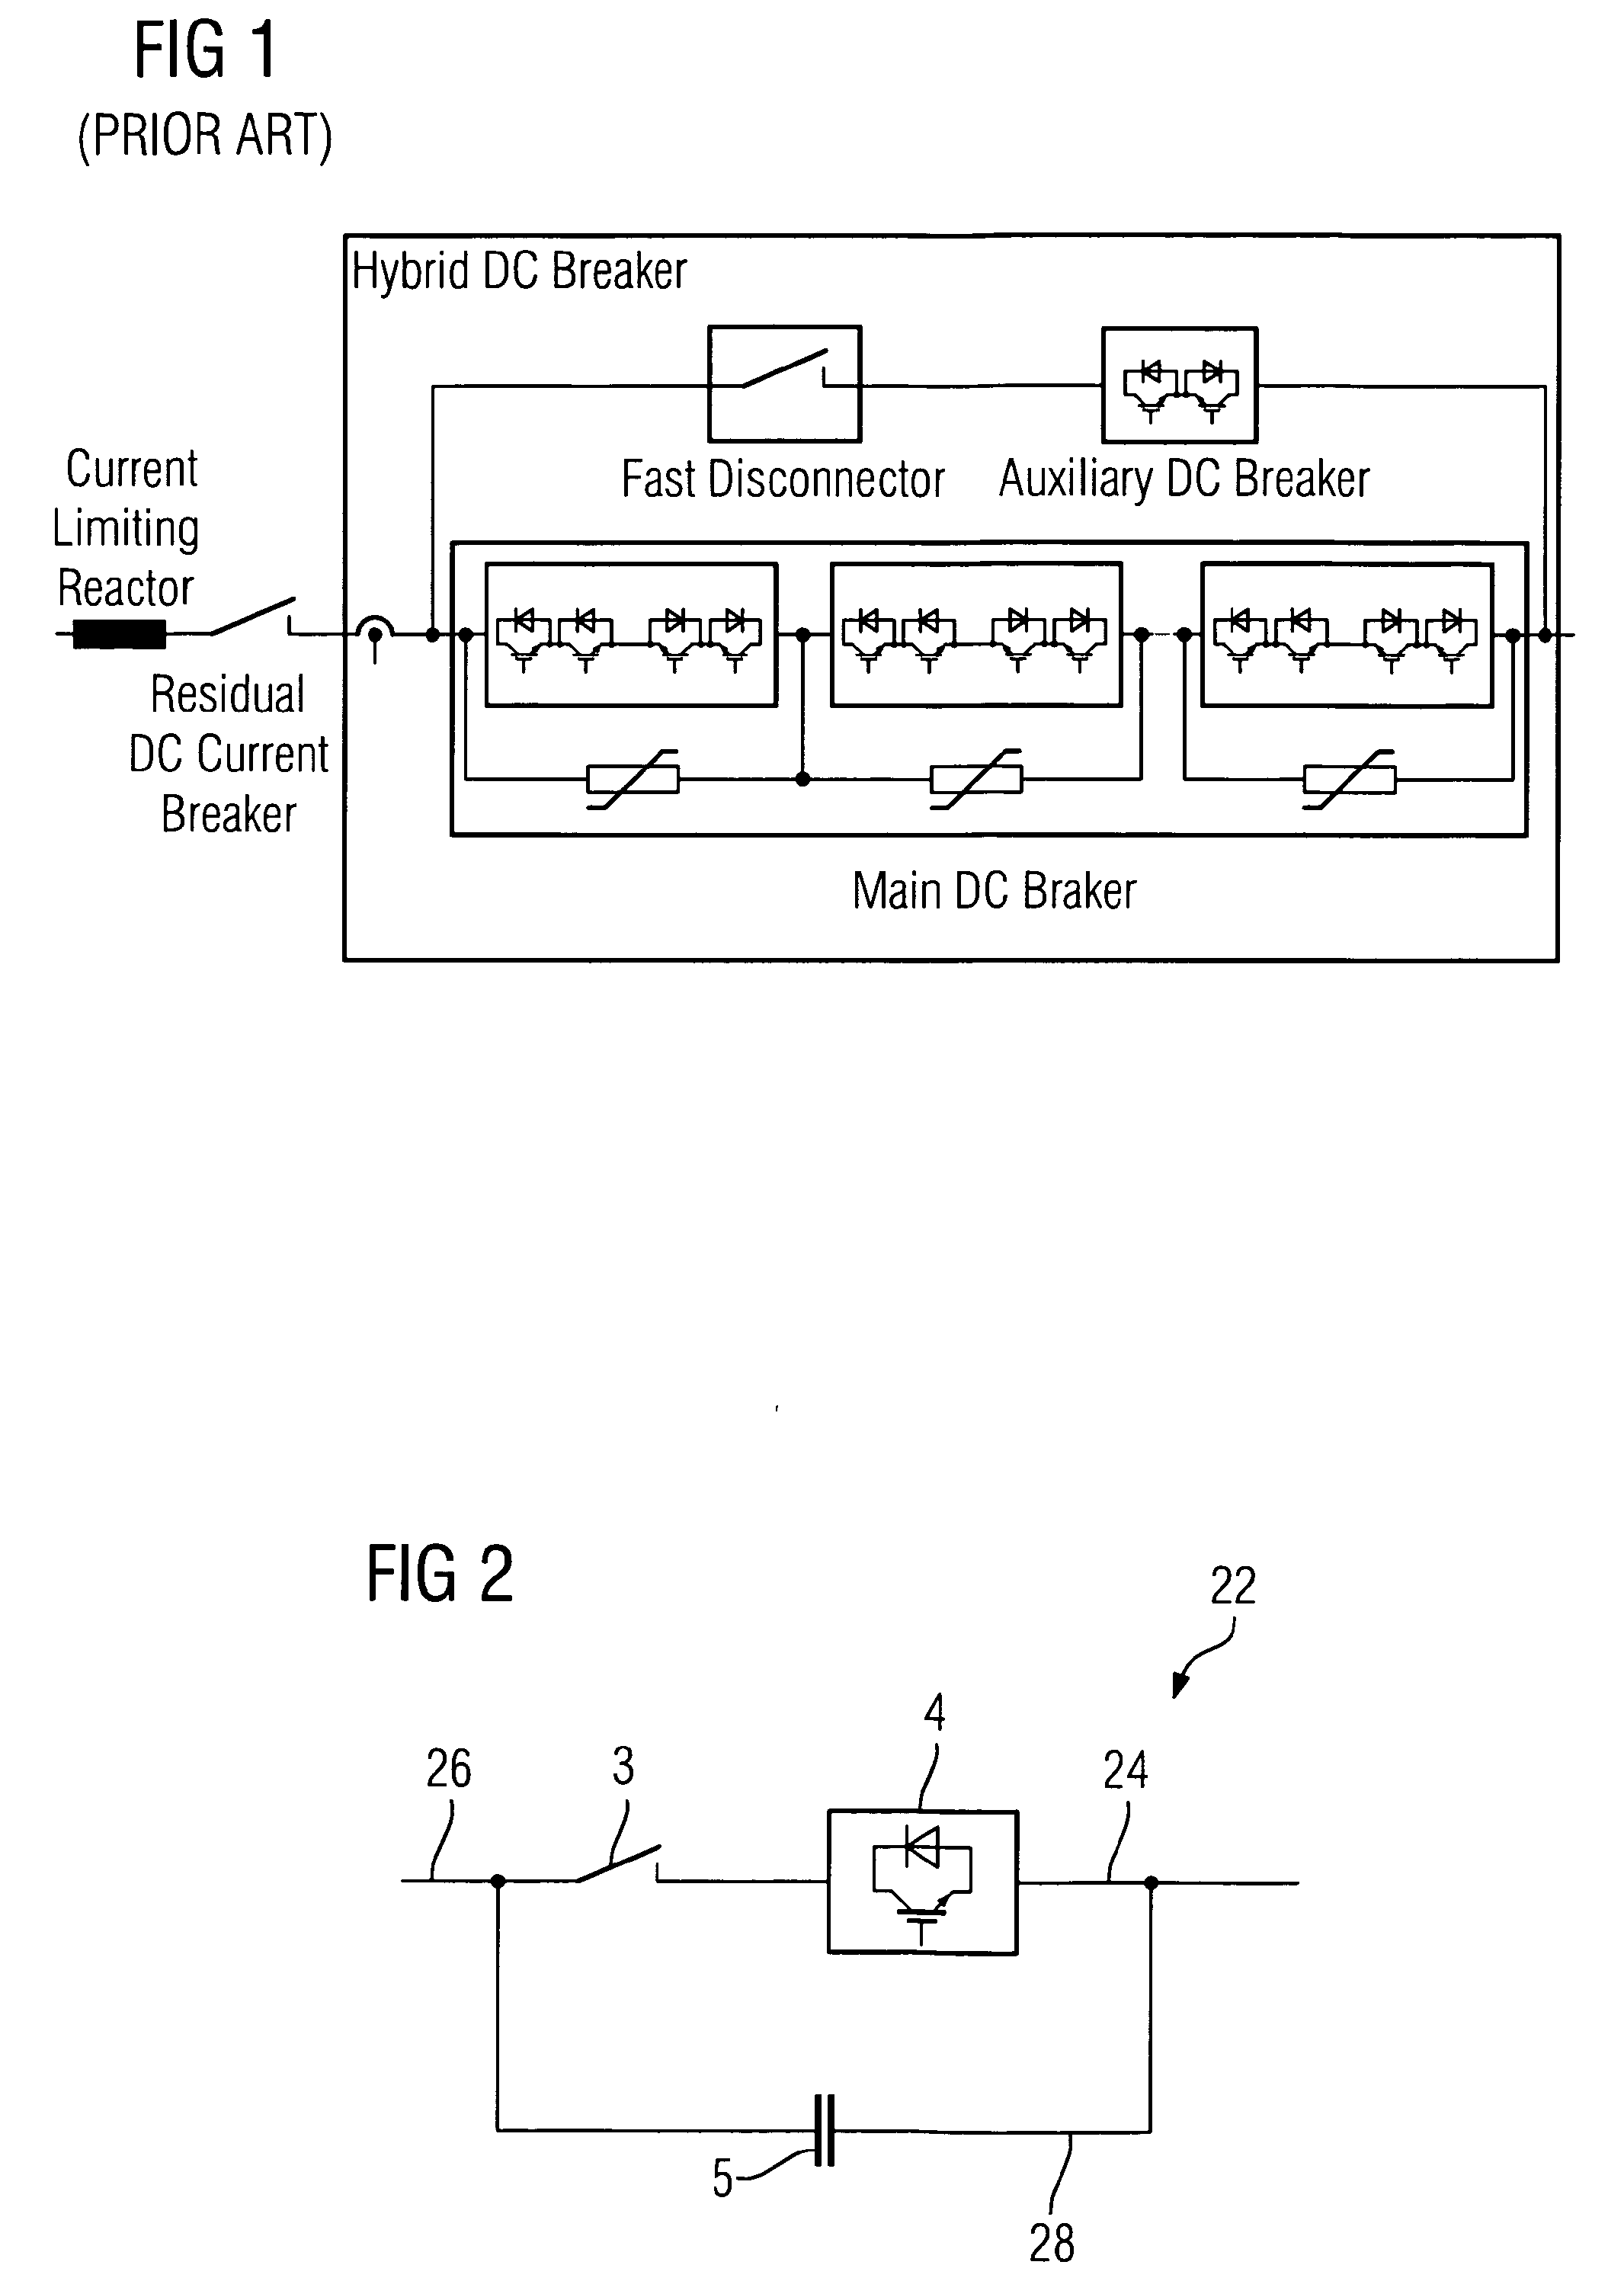 Hybrid DC circuit breaking device